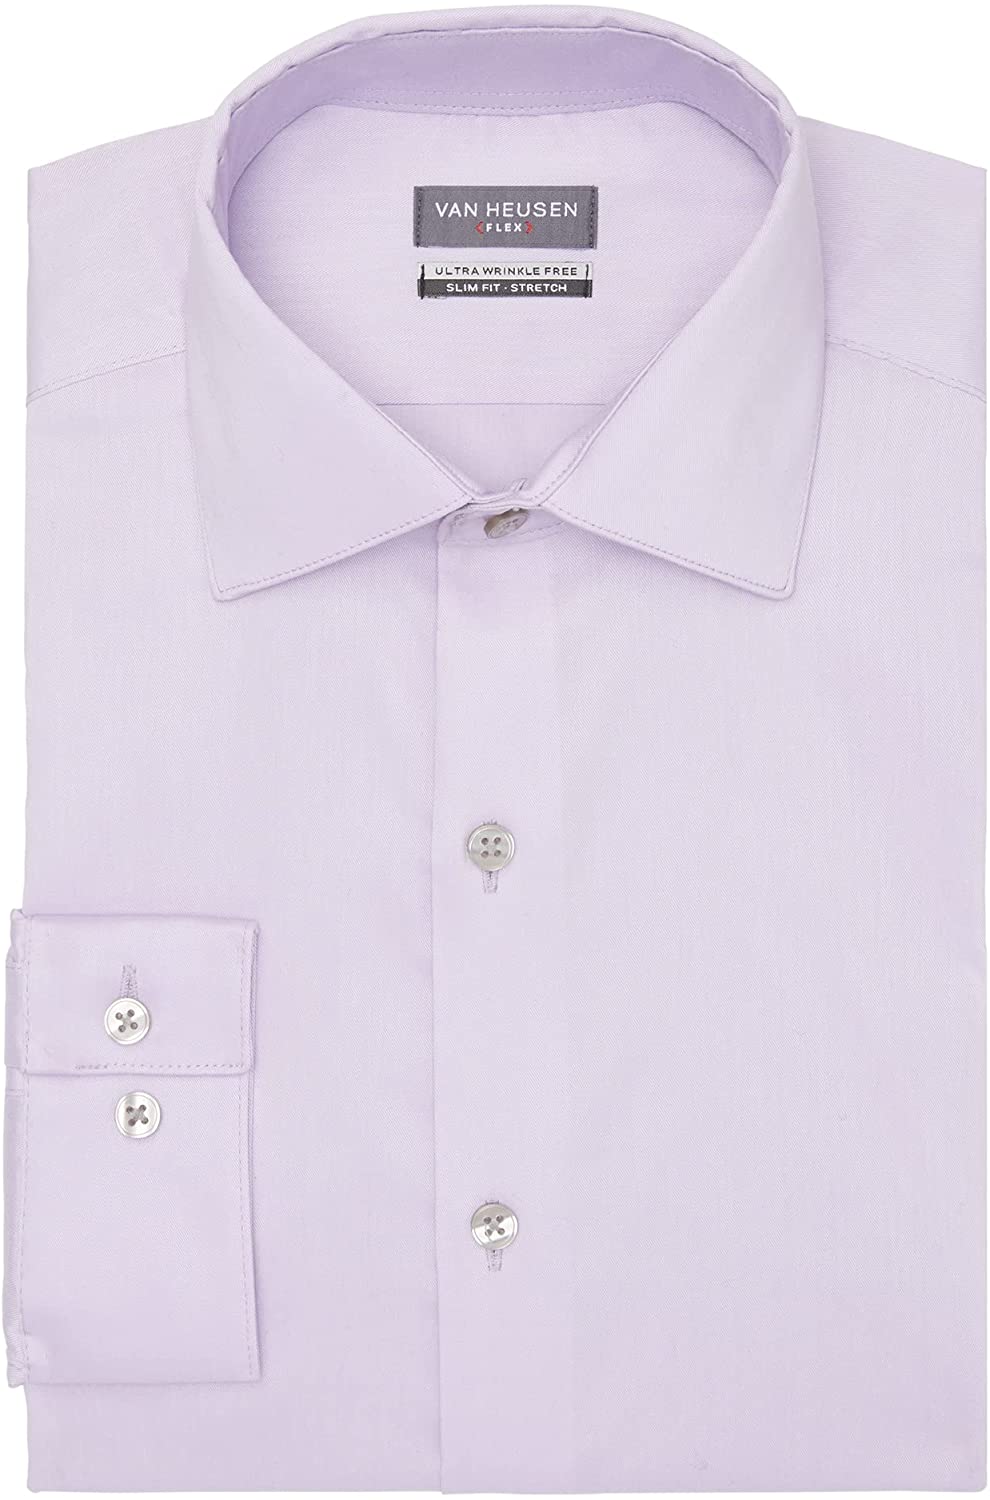 Van Heusen Men's Ultra Wrinkle Free Flex Collar Slim Fit Dress Shirt